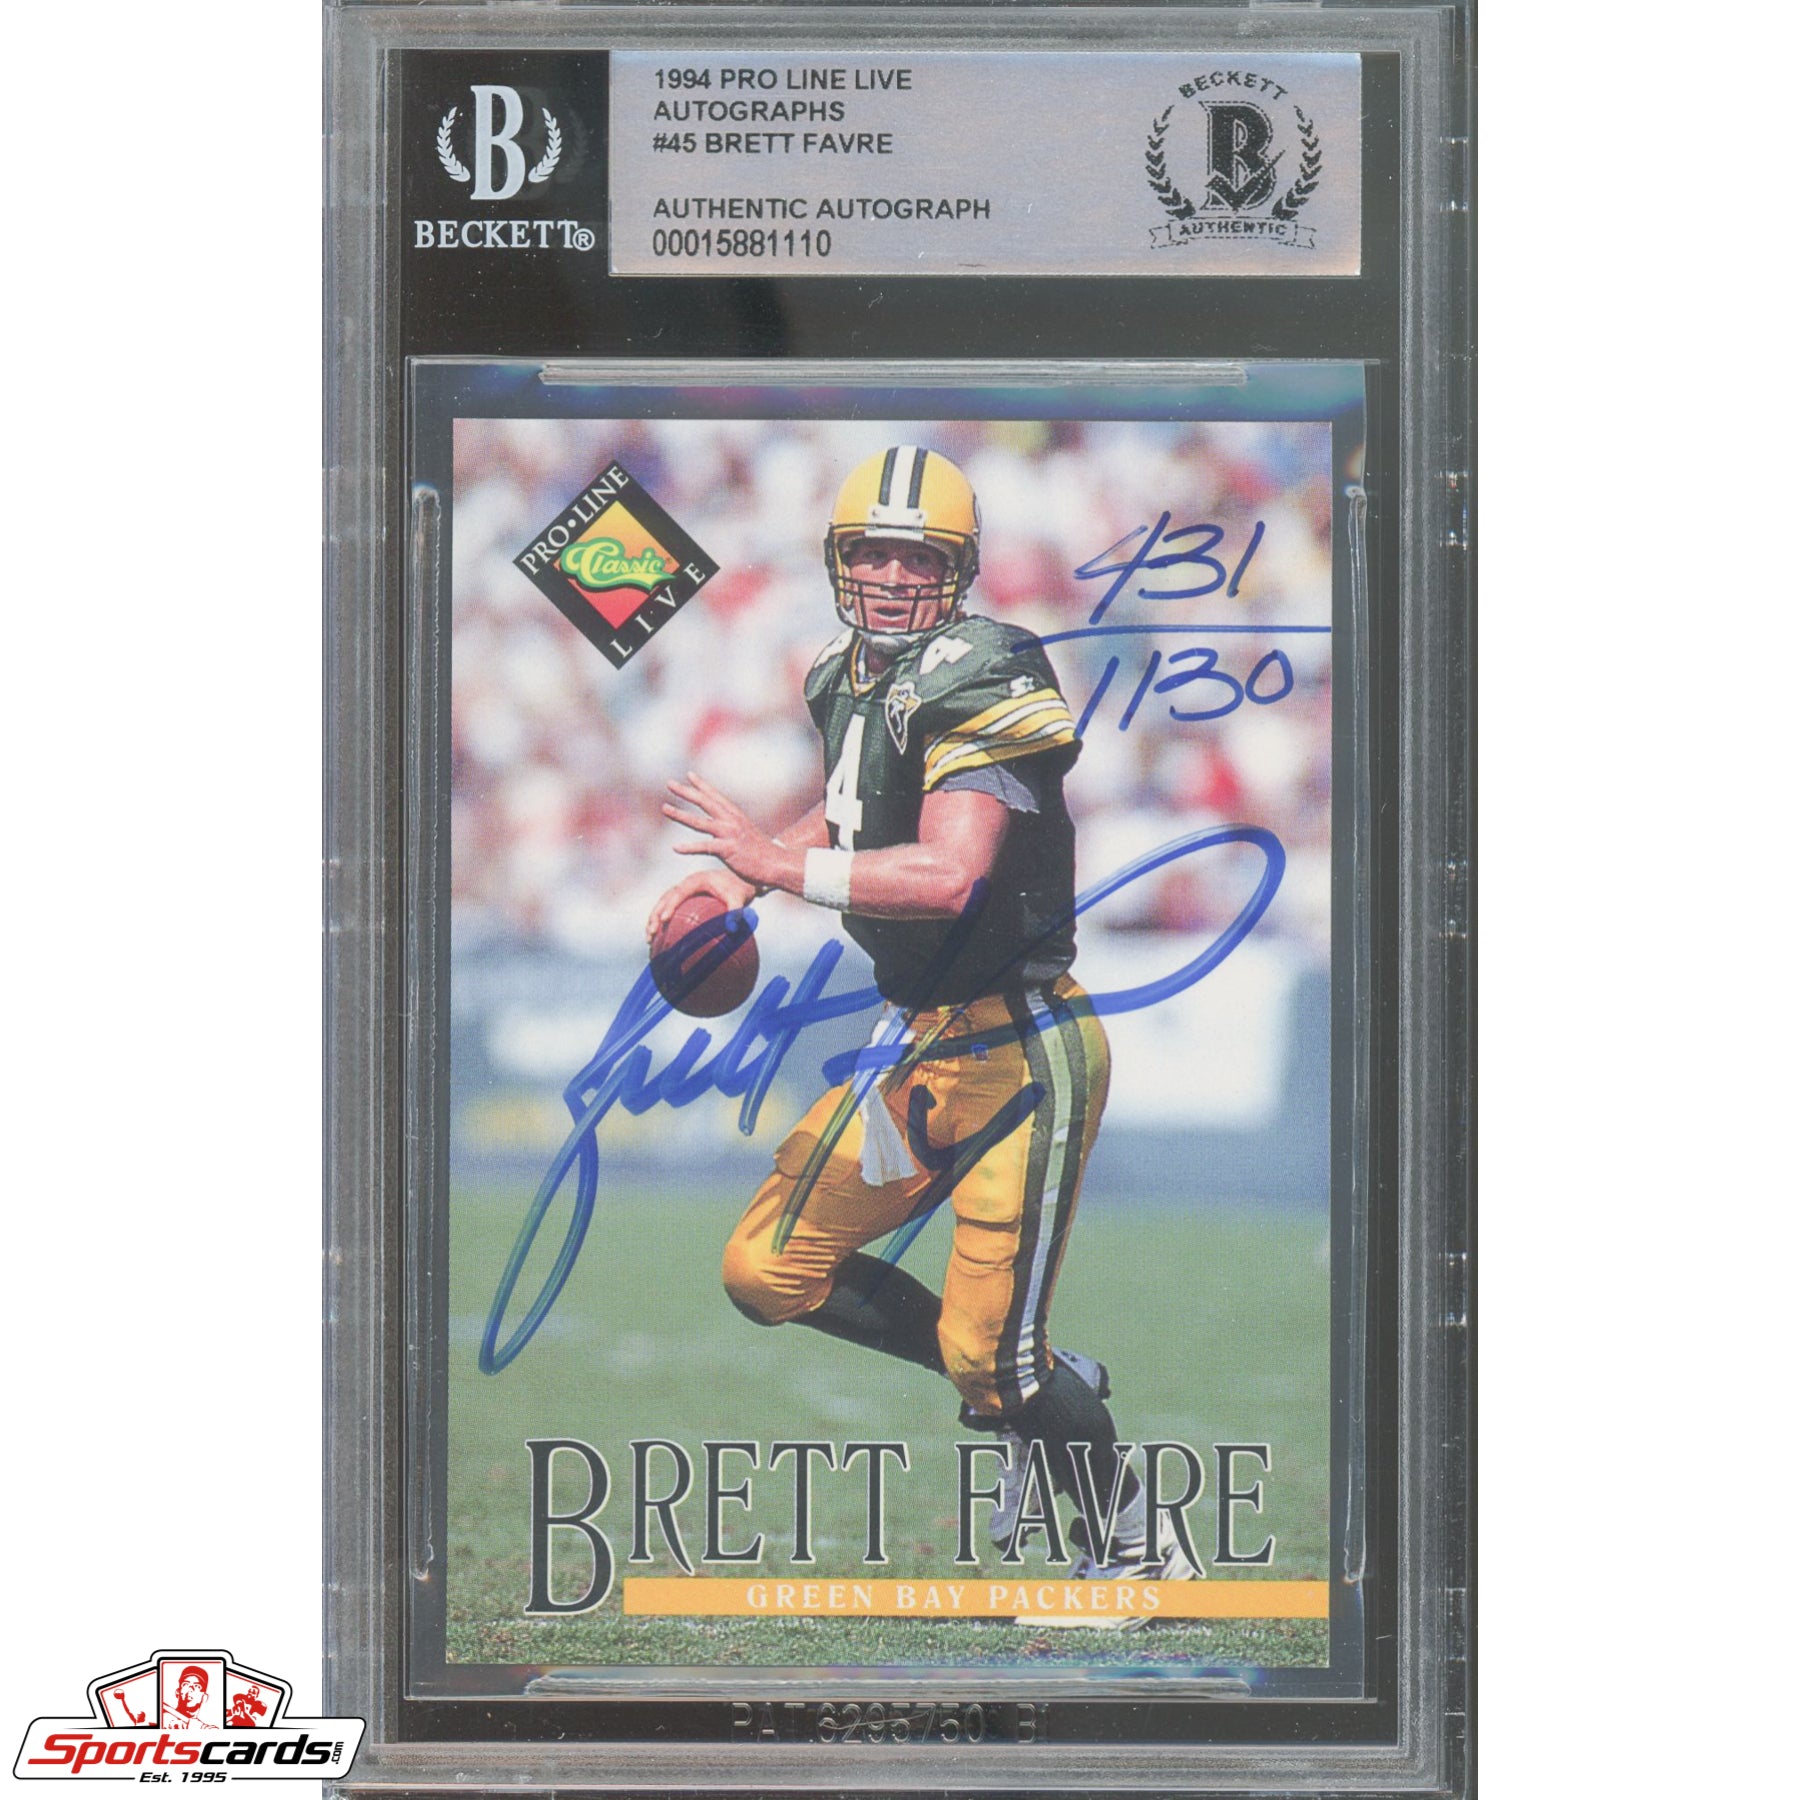 1994 Pro Line Live Brett Favre Signed Auto Beckett BAS Packers